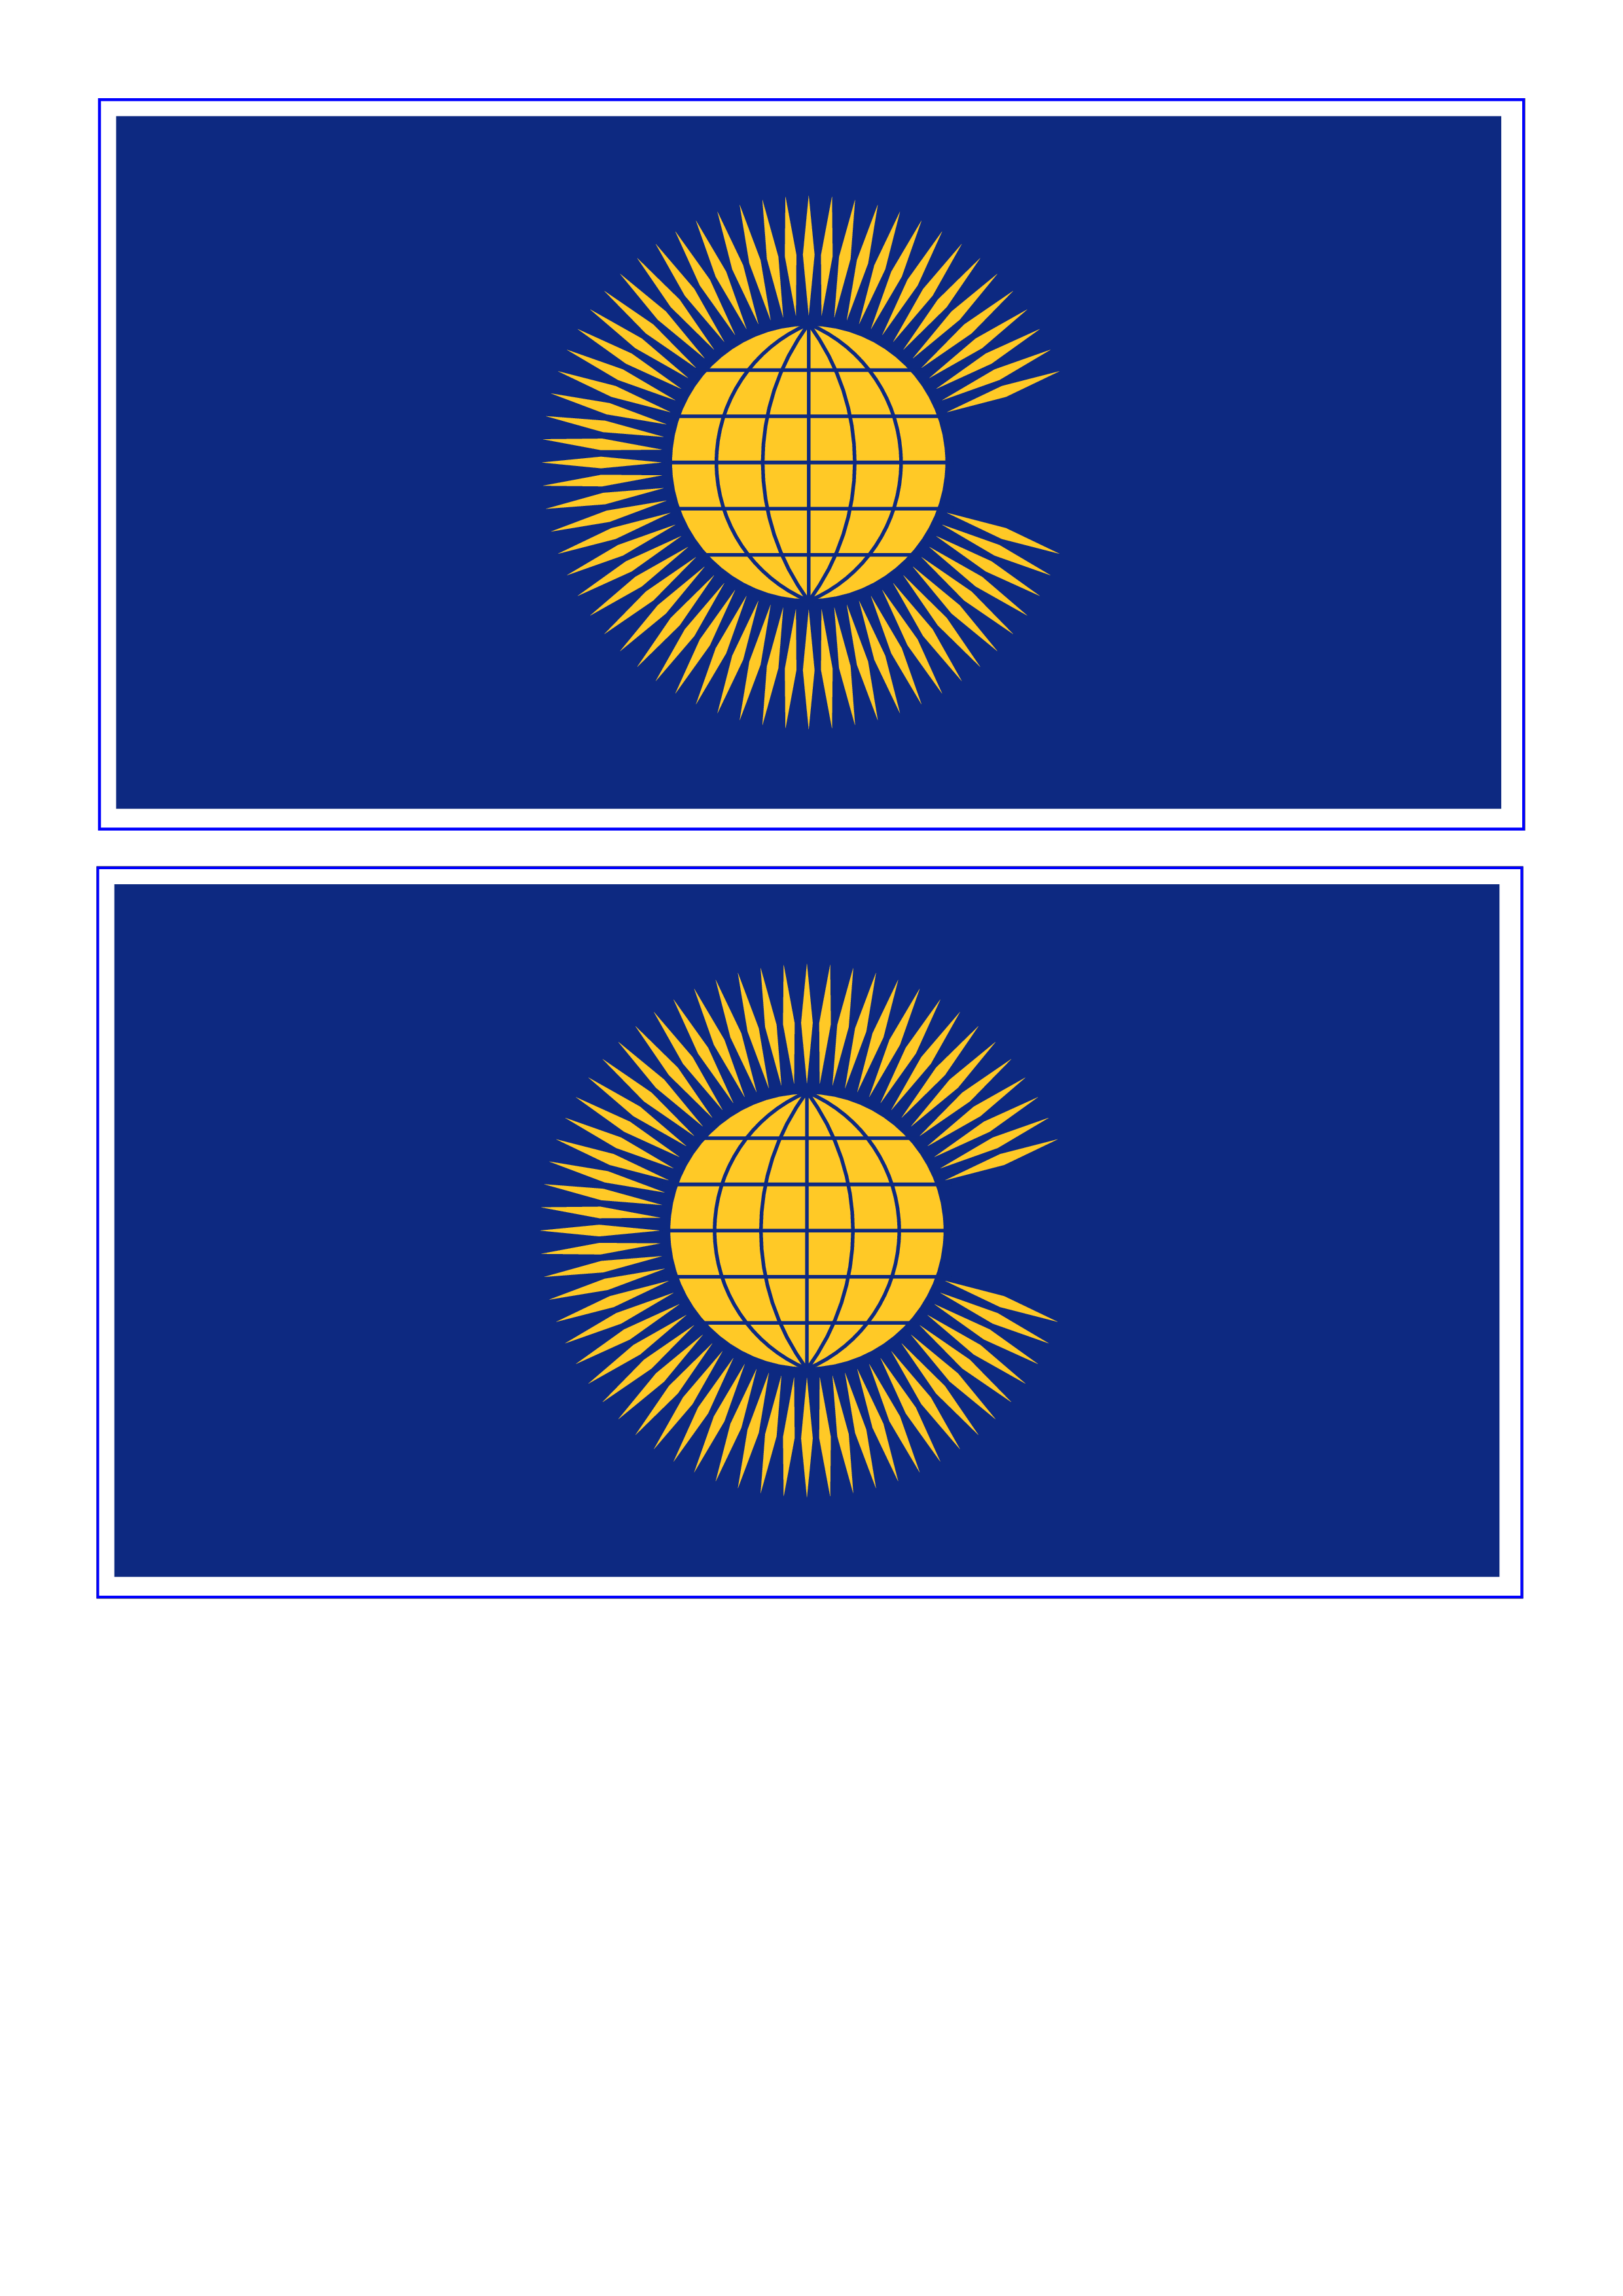 Commonwealth Flag main image